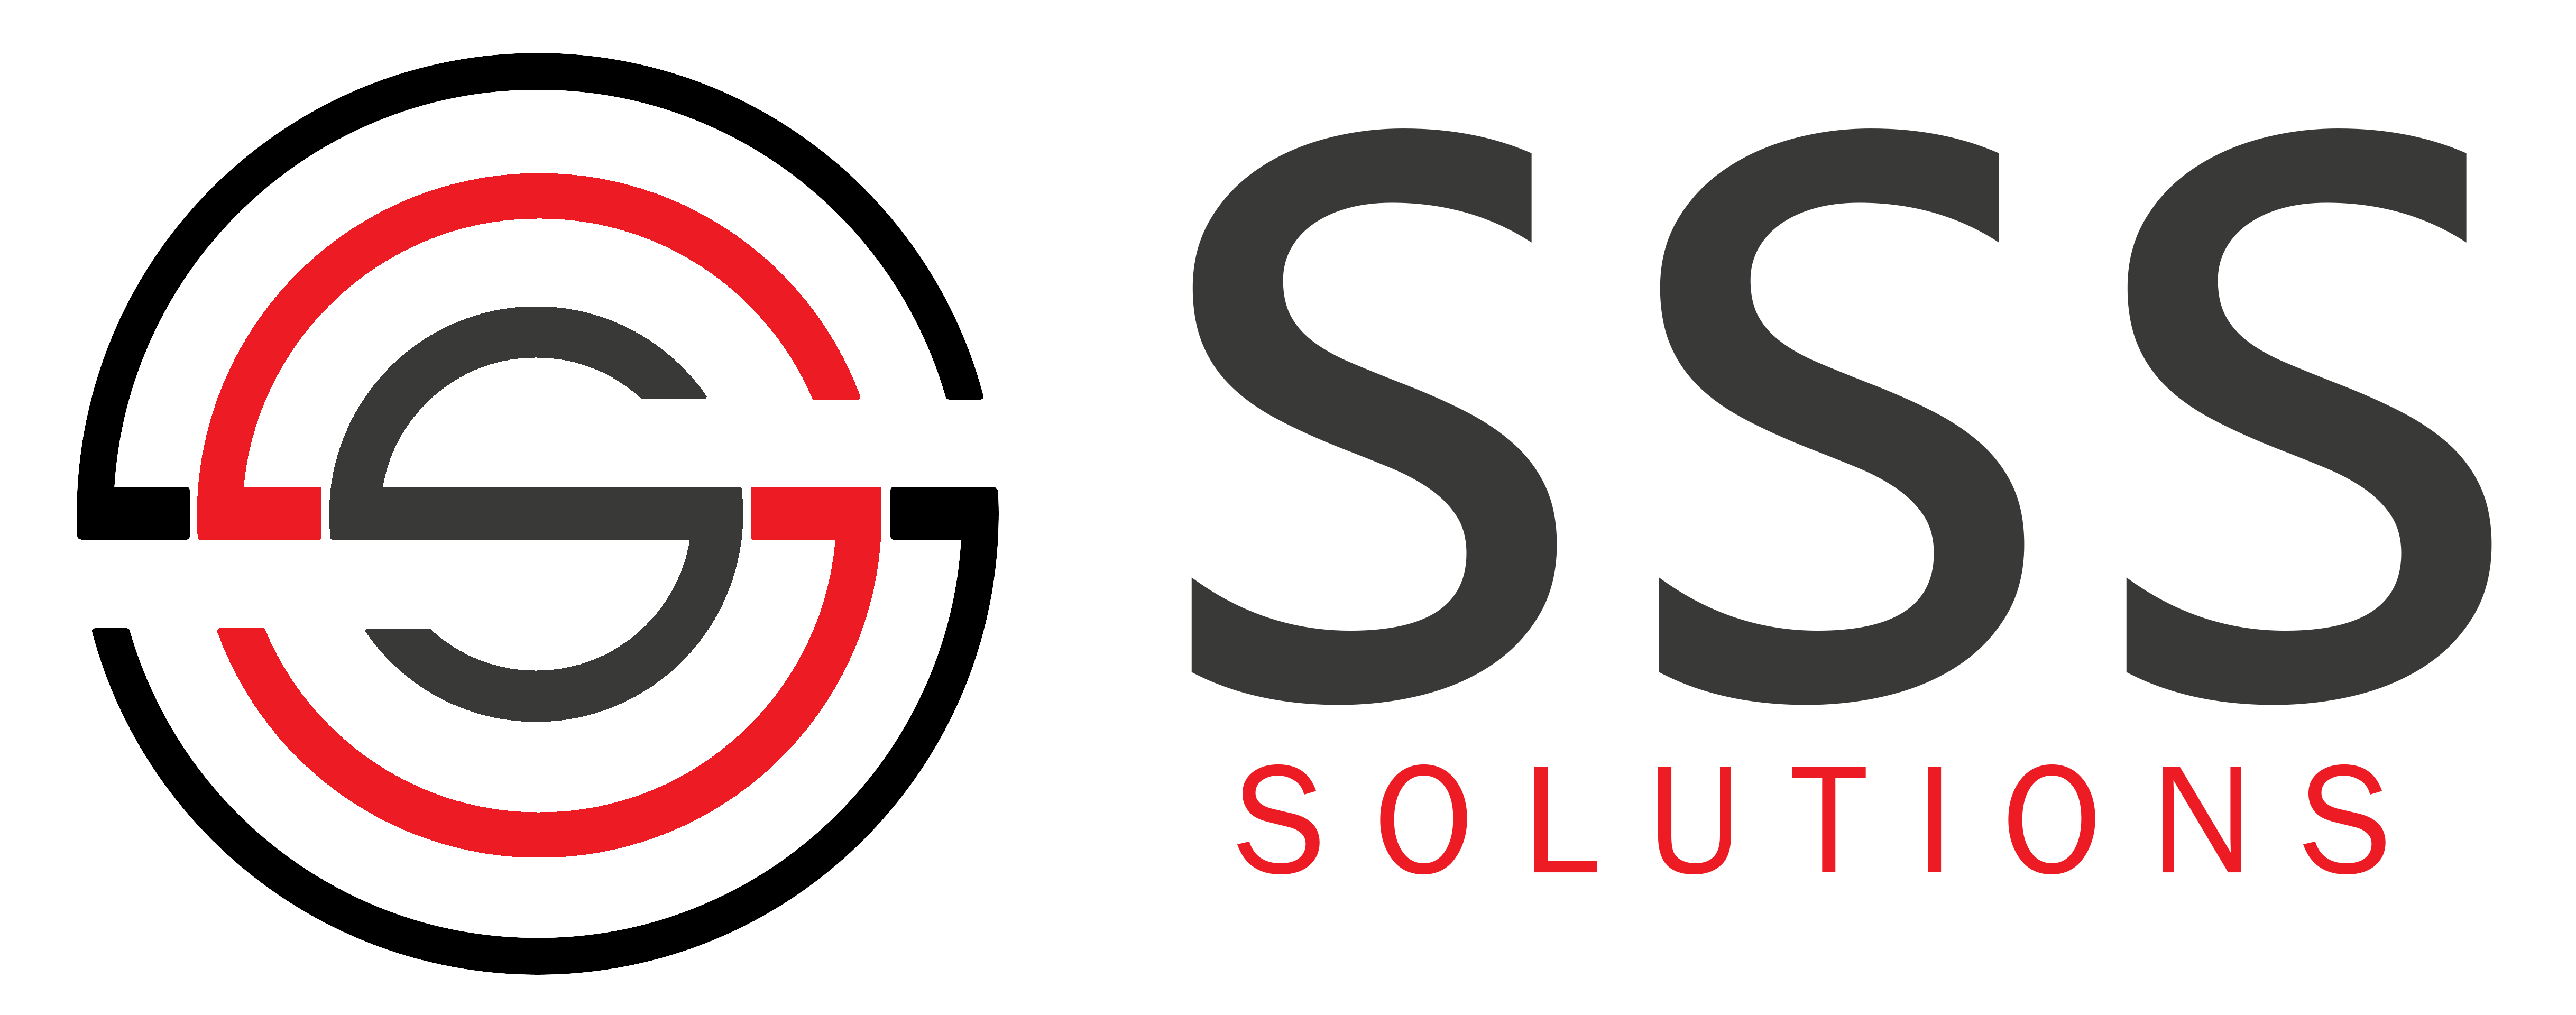 SSS Logo - Sss Logo Gp(1)